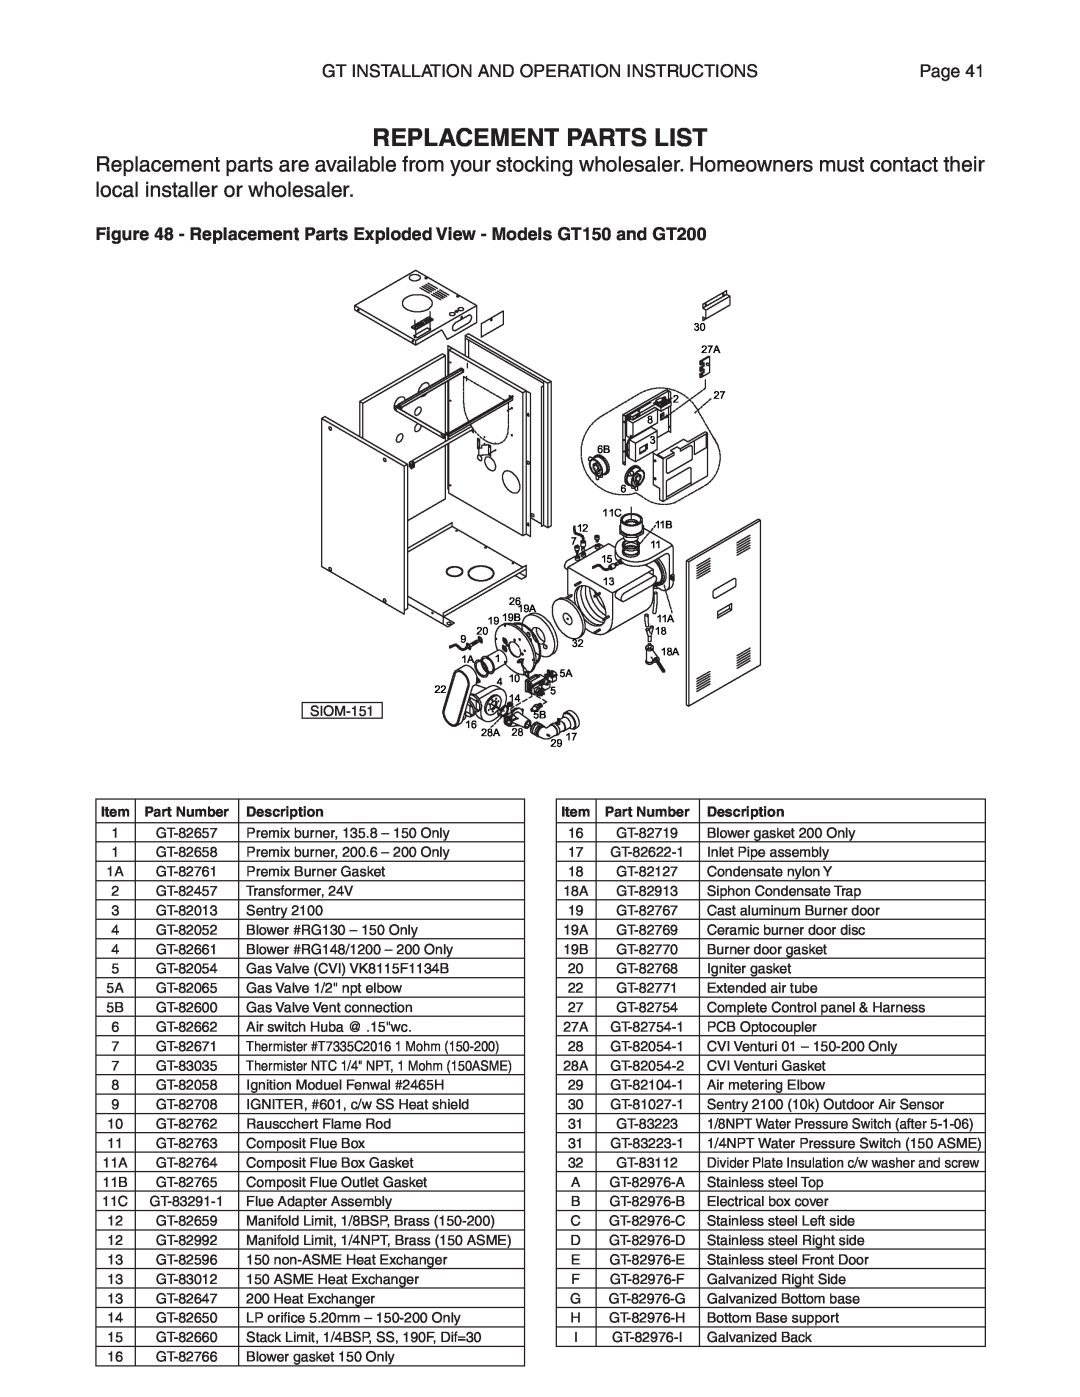 Smith Cast Iron Boilers GT Series manual Replacement Parts List, Part Number, Description 